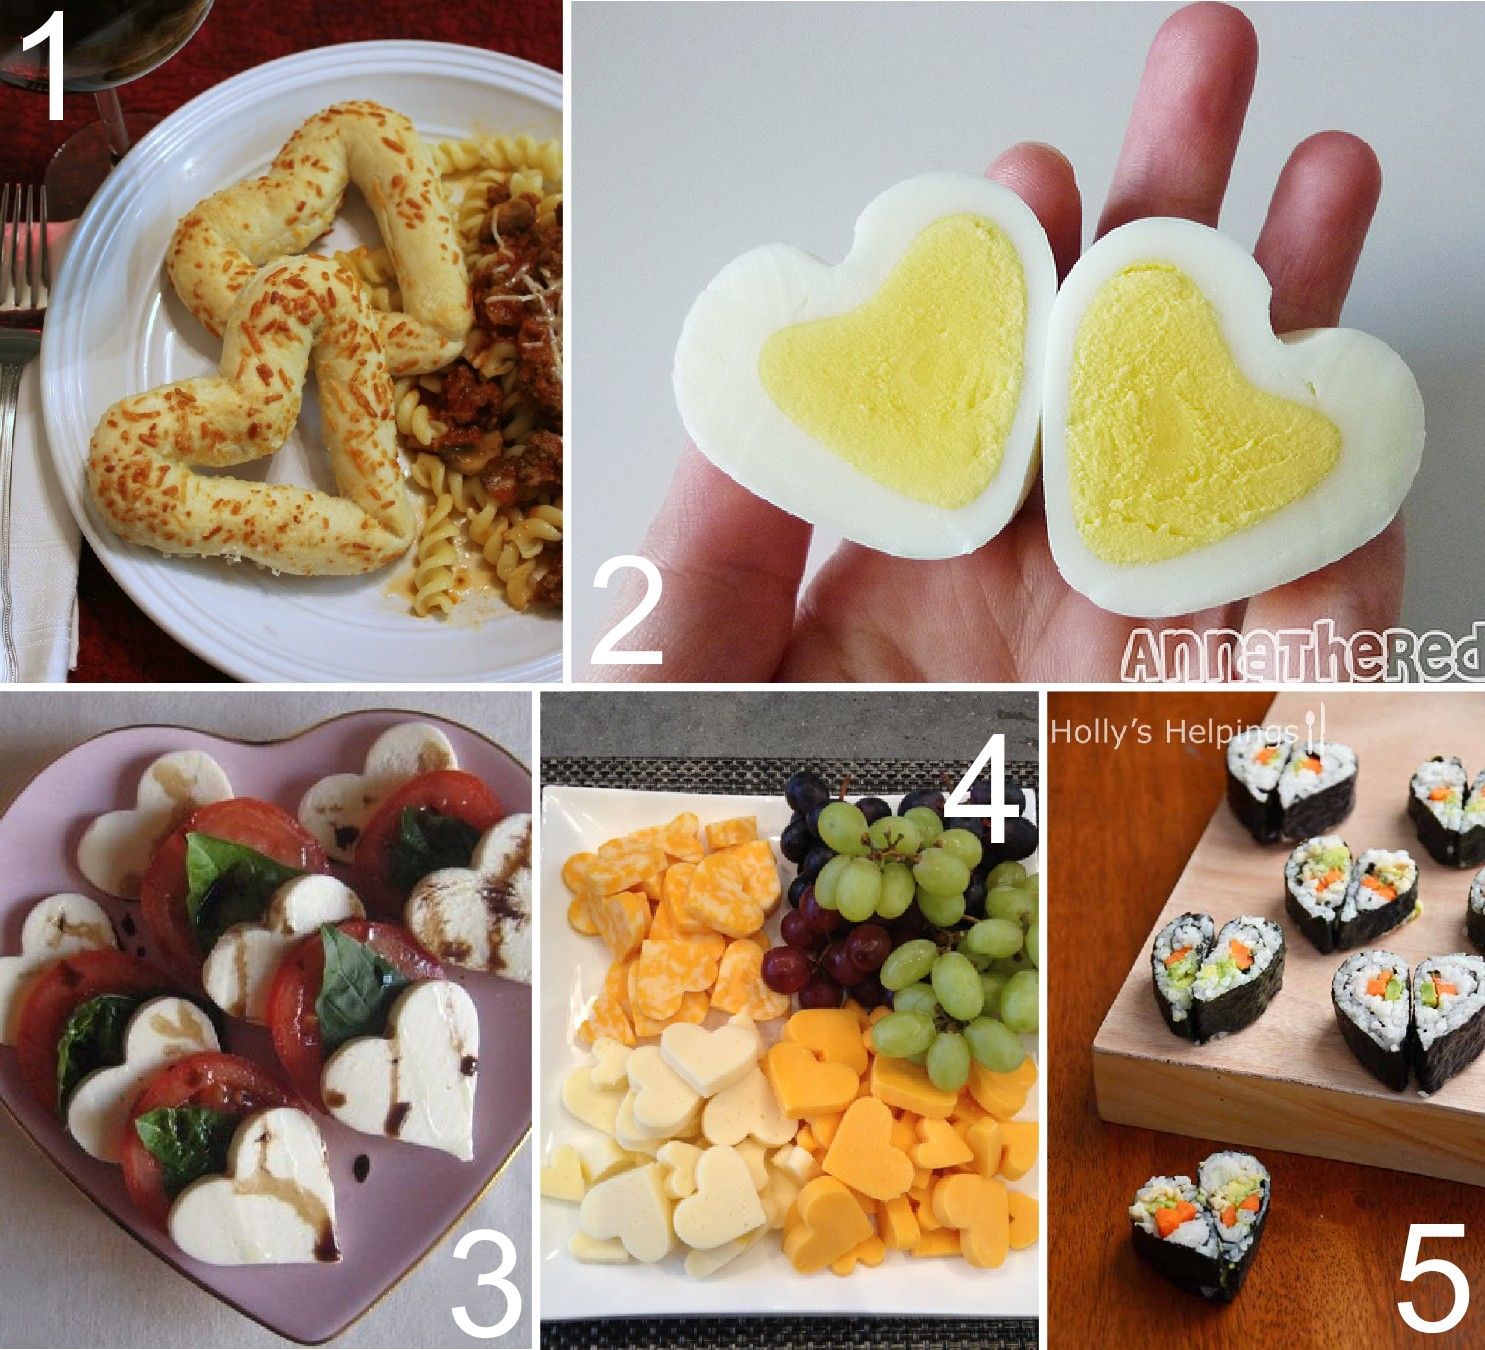 Heart-Shaped Food Items